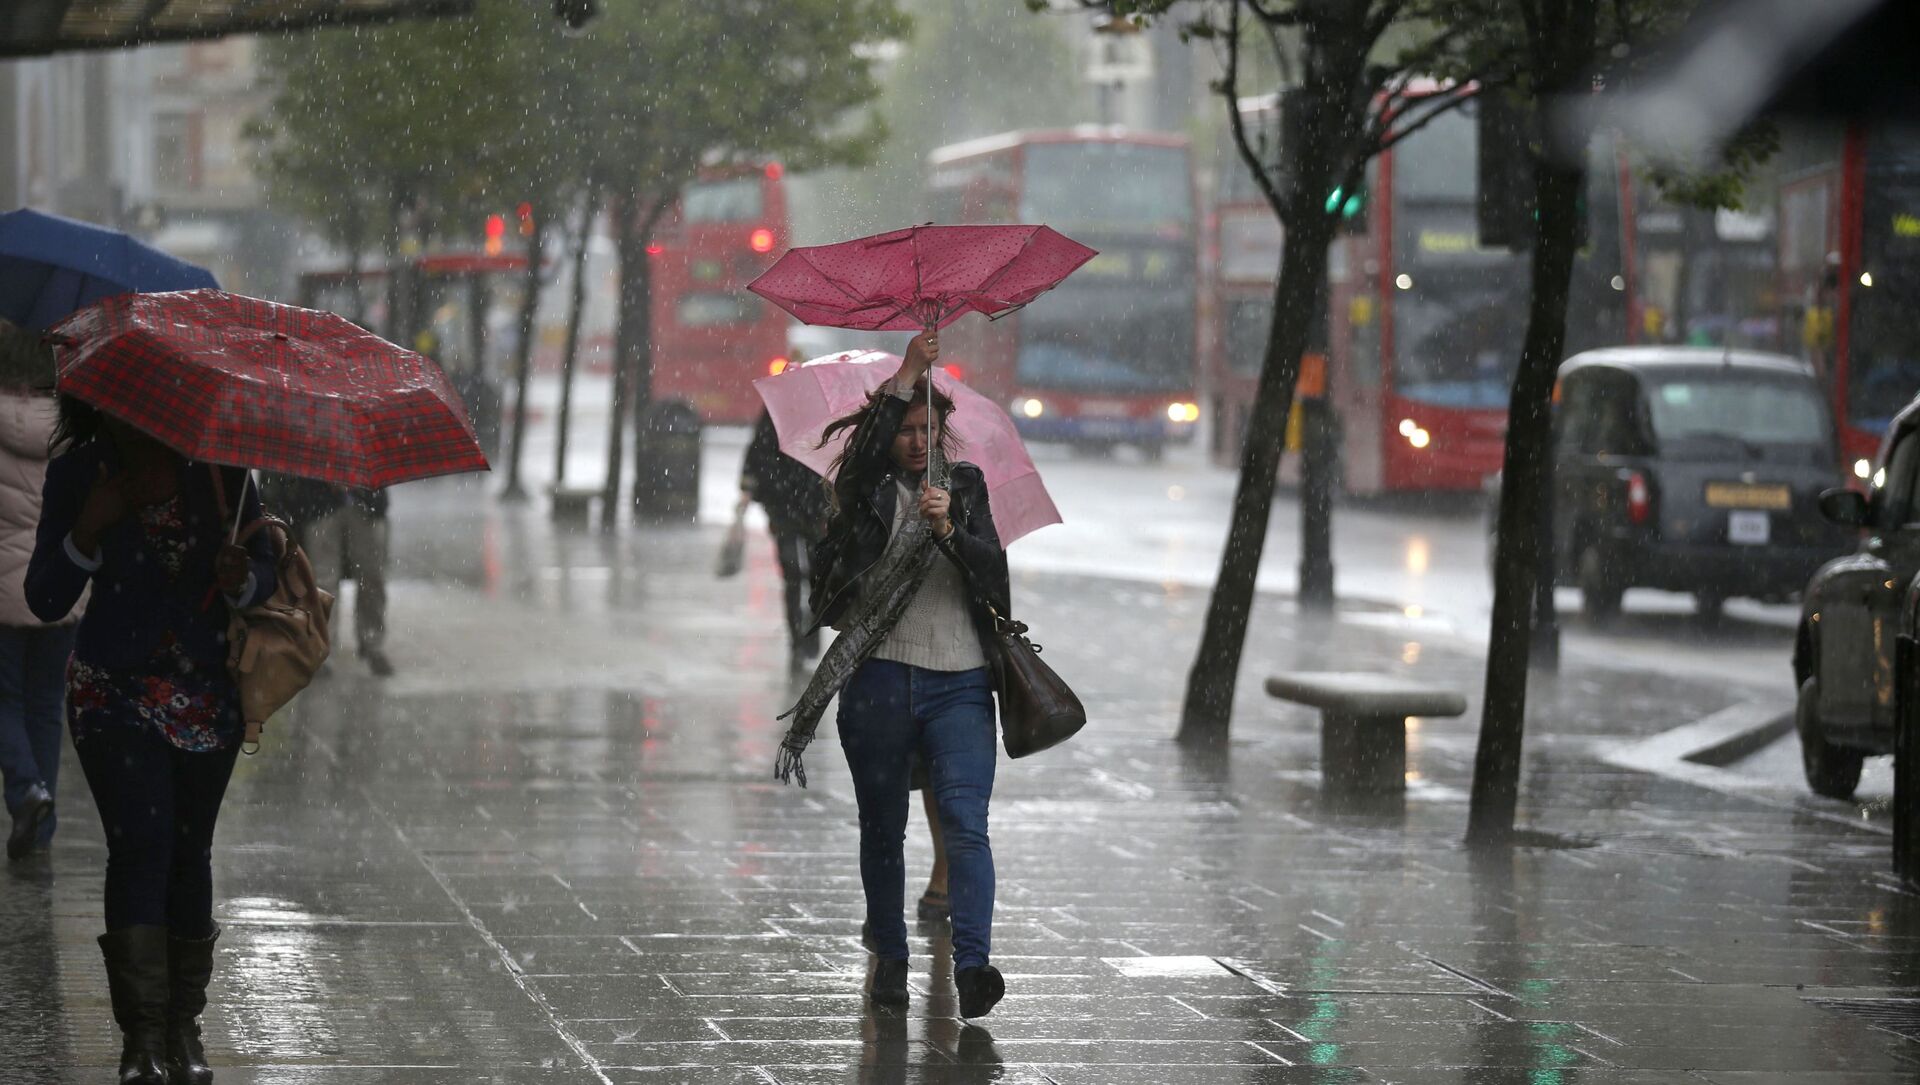 A woman's umbrella blown inside-out as she walks through a heavy rain shower on Oxford Street in London (File) - Sputnik International, 1920, 26.07.2021